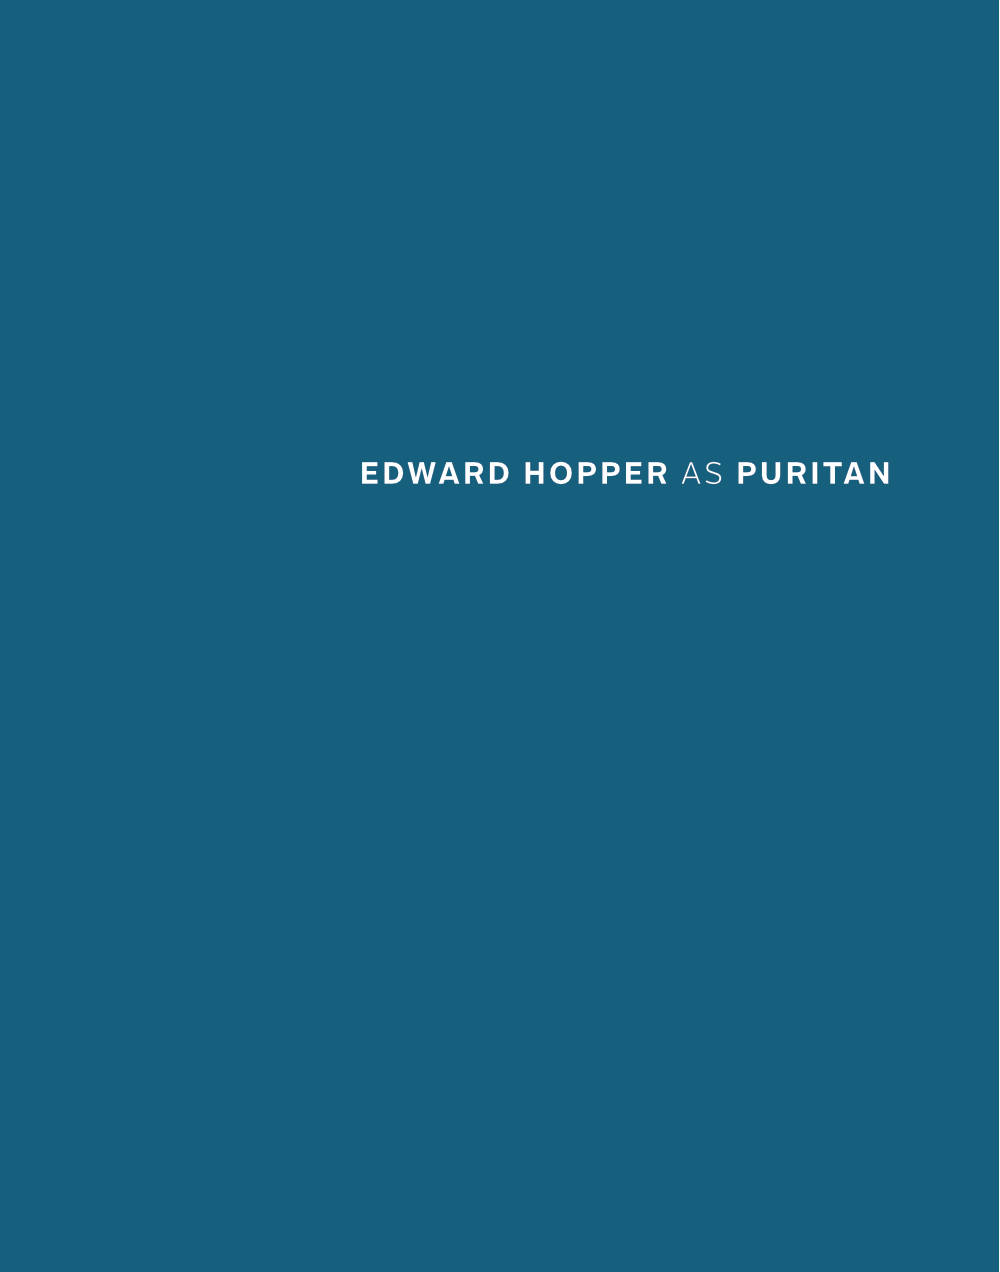 Edward Hopper as Puritan, published by Craig Starr Gallery, 2023